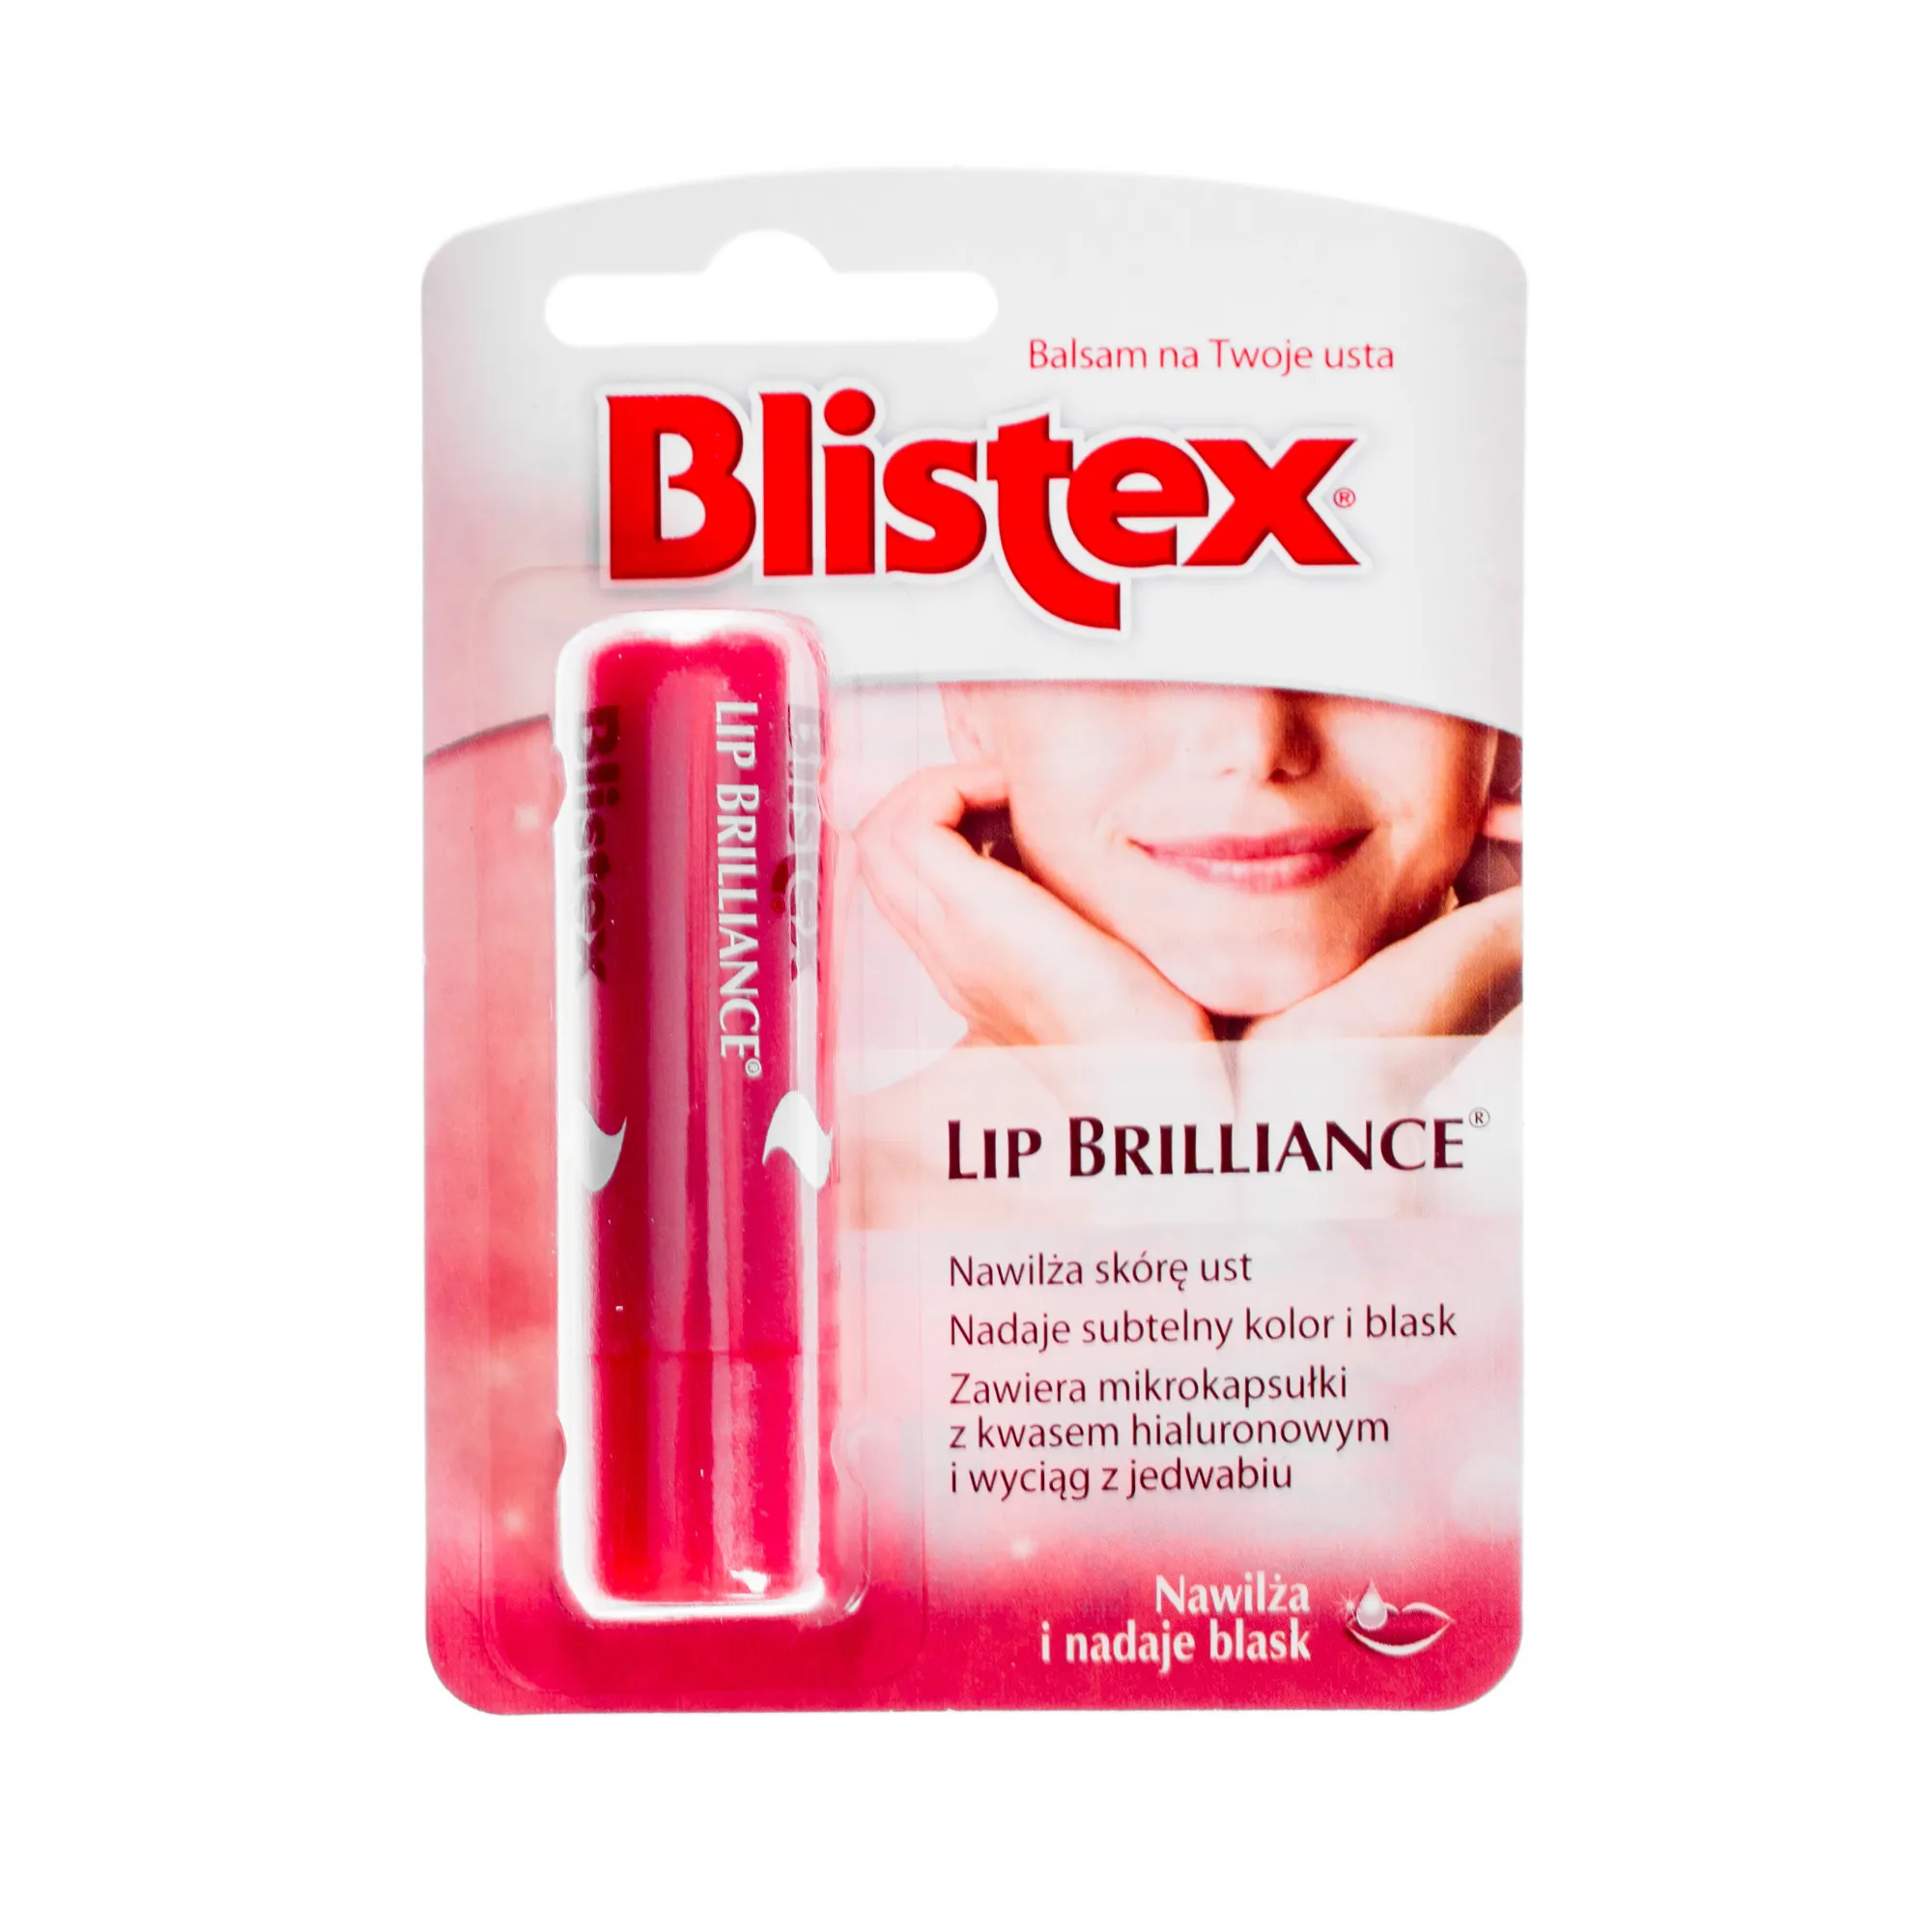 Blistex Brillance, balsam na twoje usta nawilża i nadaje blask, 3,7 g